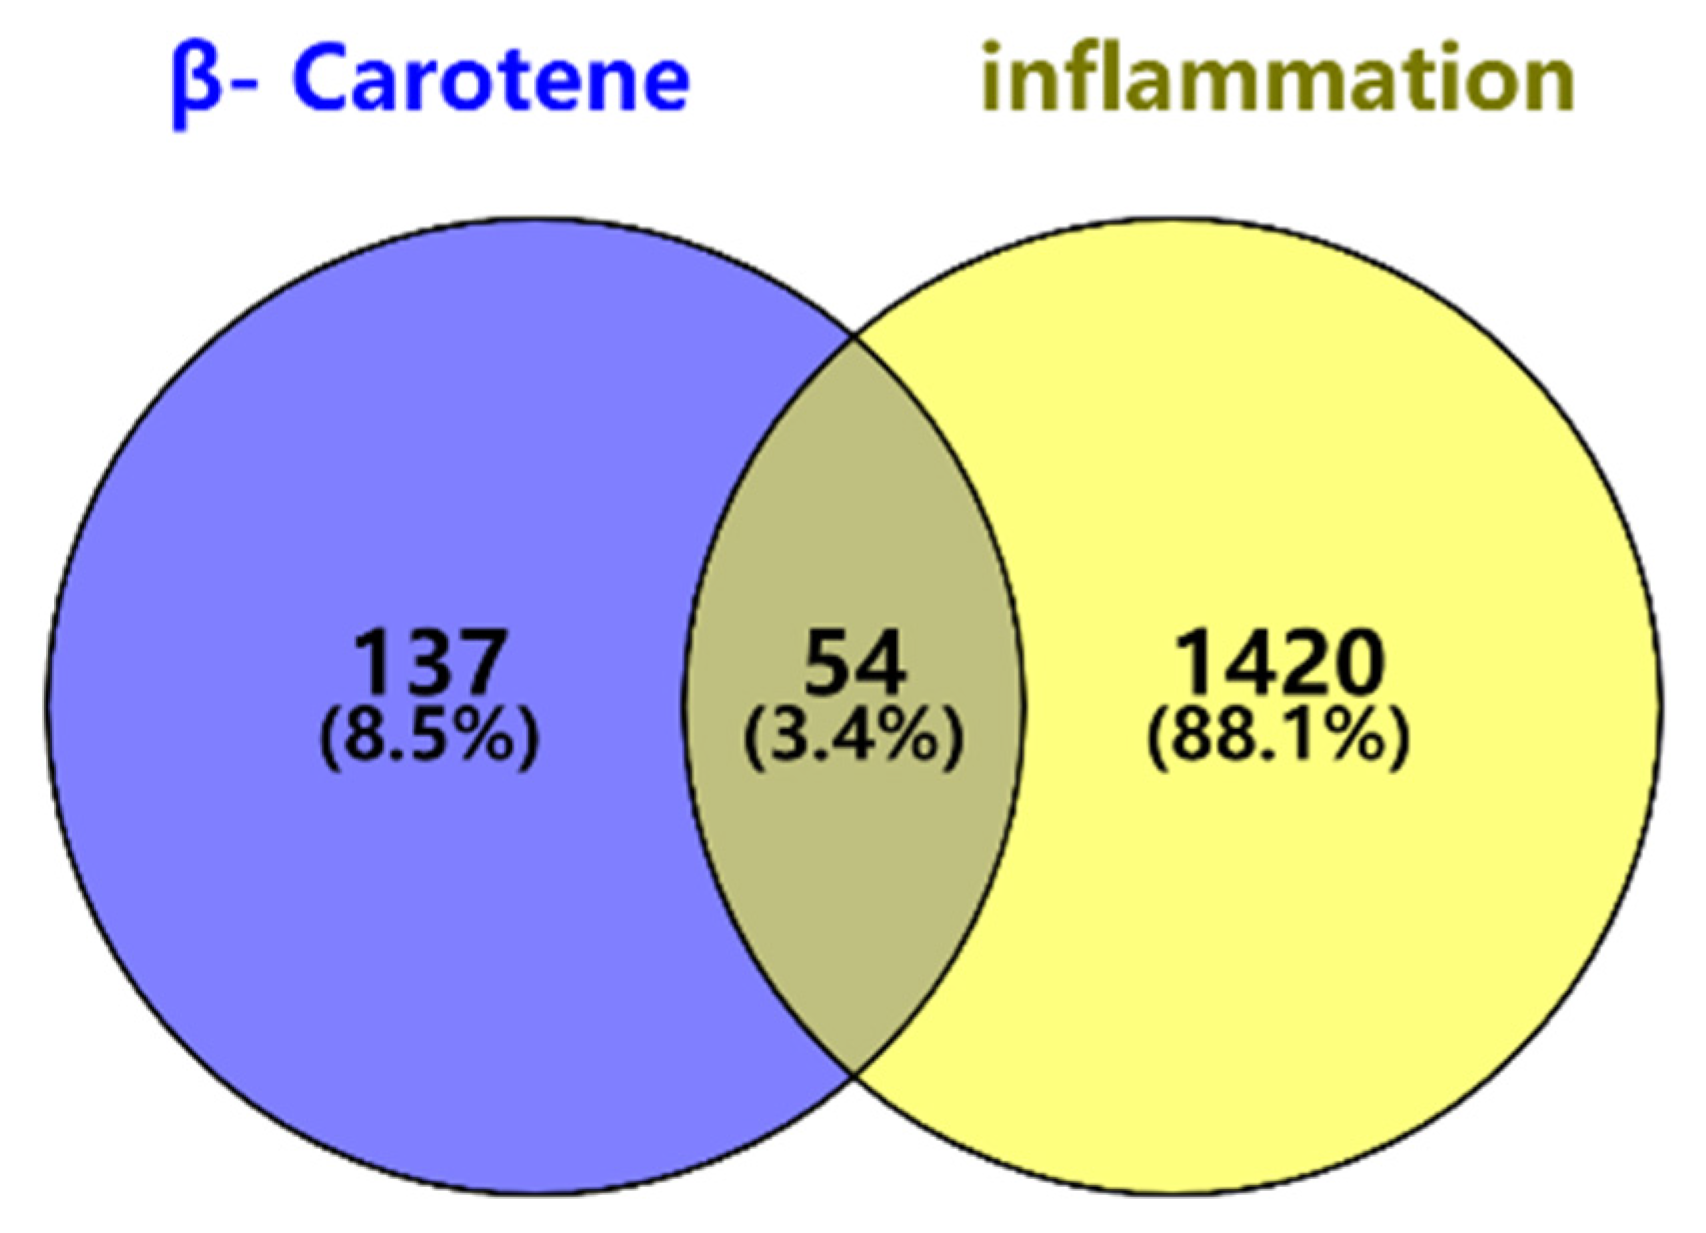 Beta-carotene and inflammation reduction